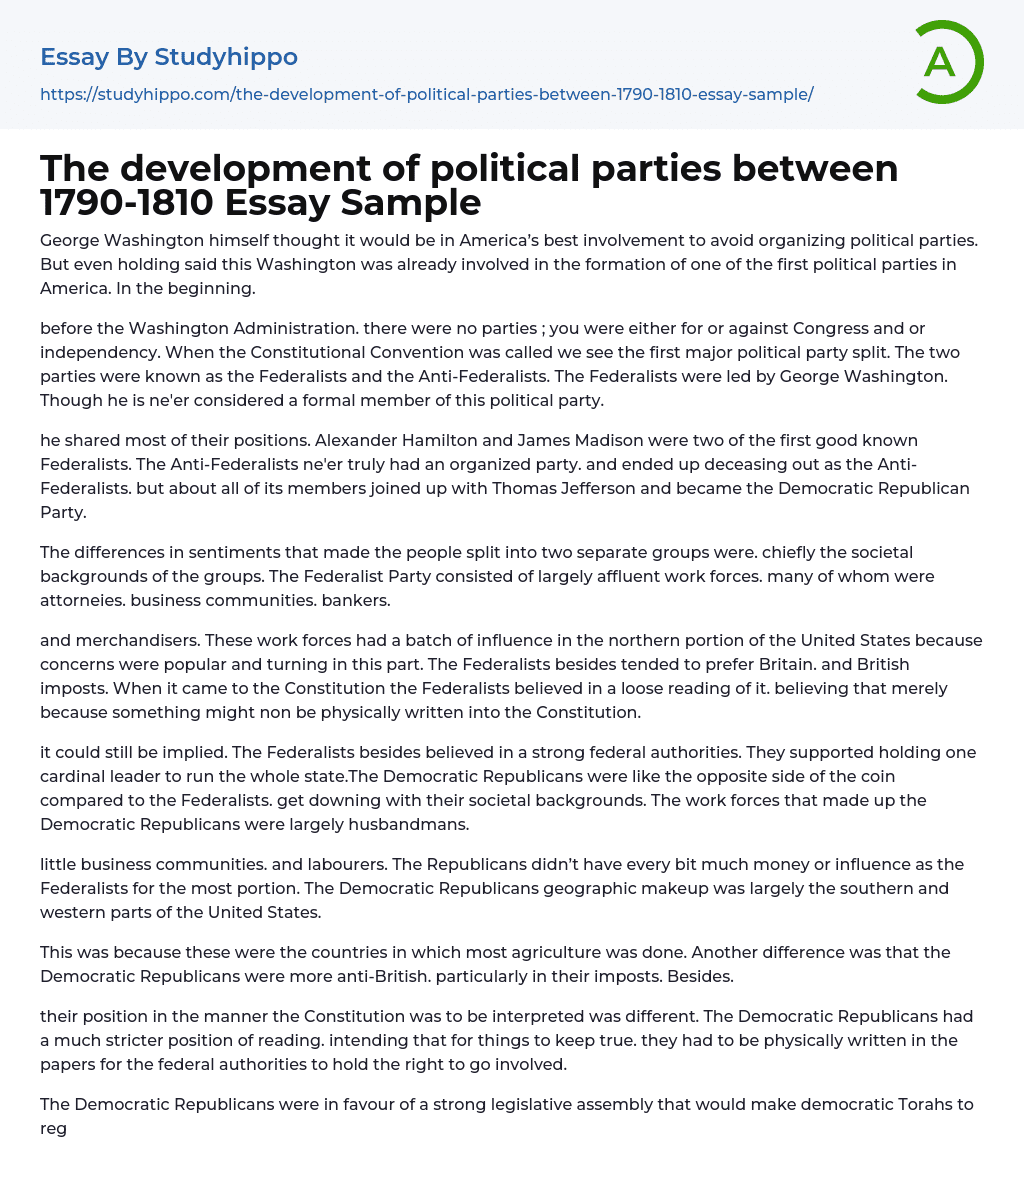 The development of political parties between 1790-1810 Essay Sample